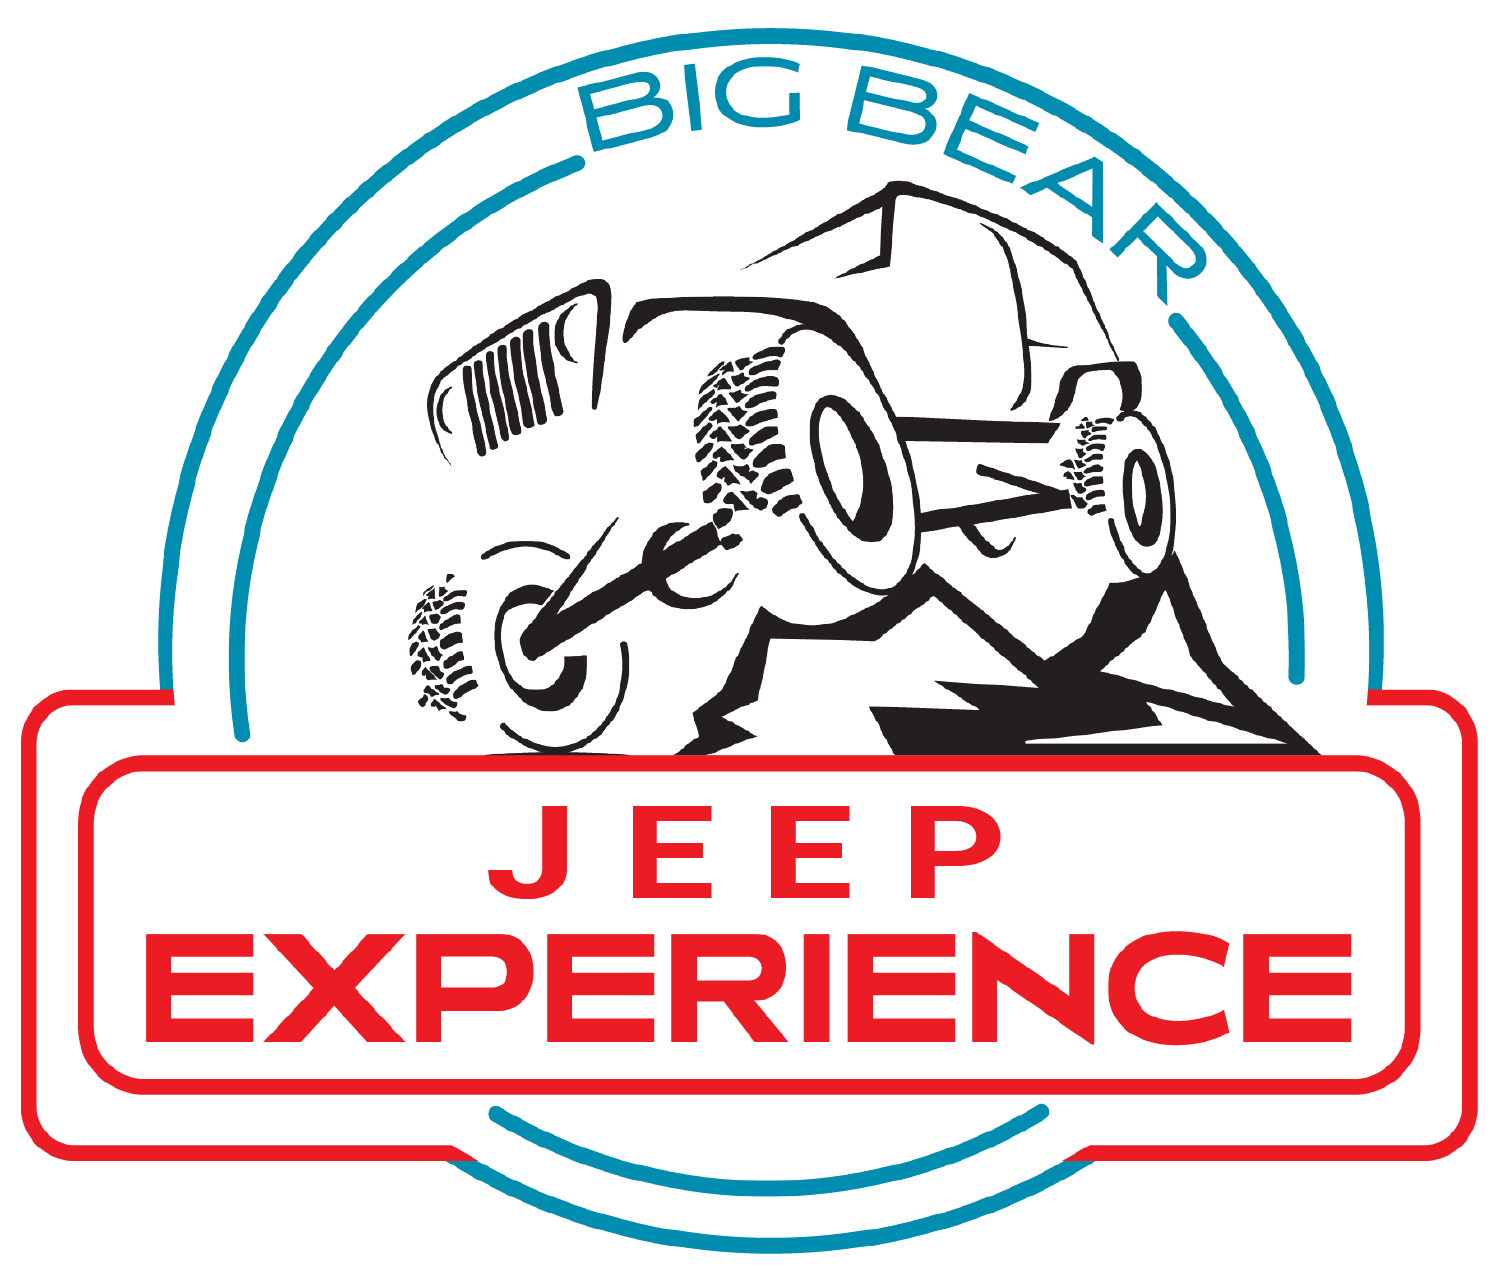 Big Bear Jeep Experience Logo